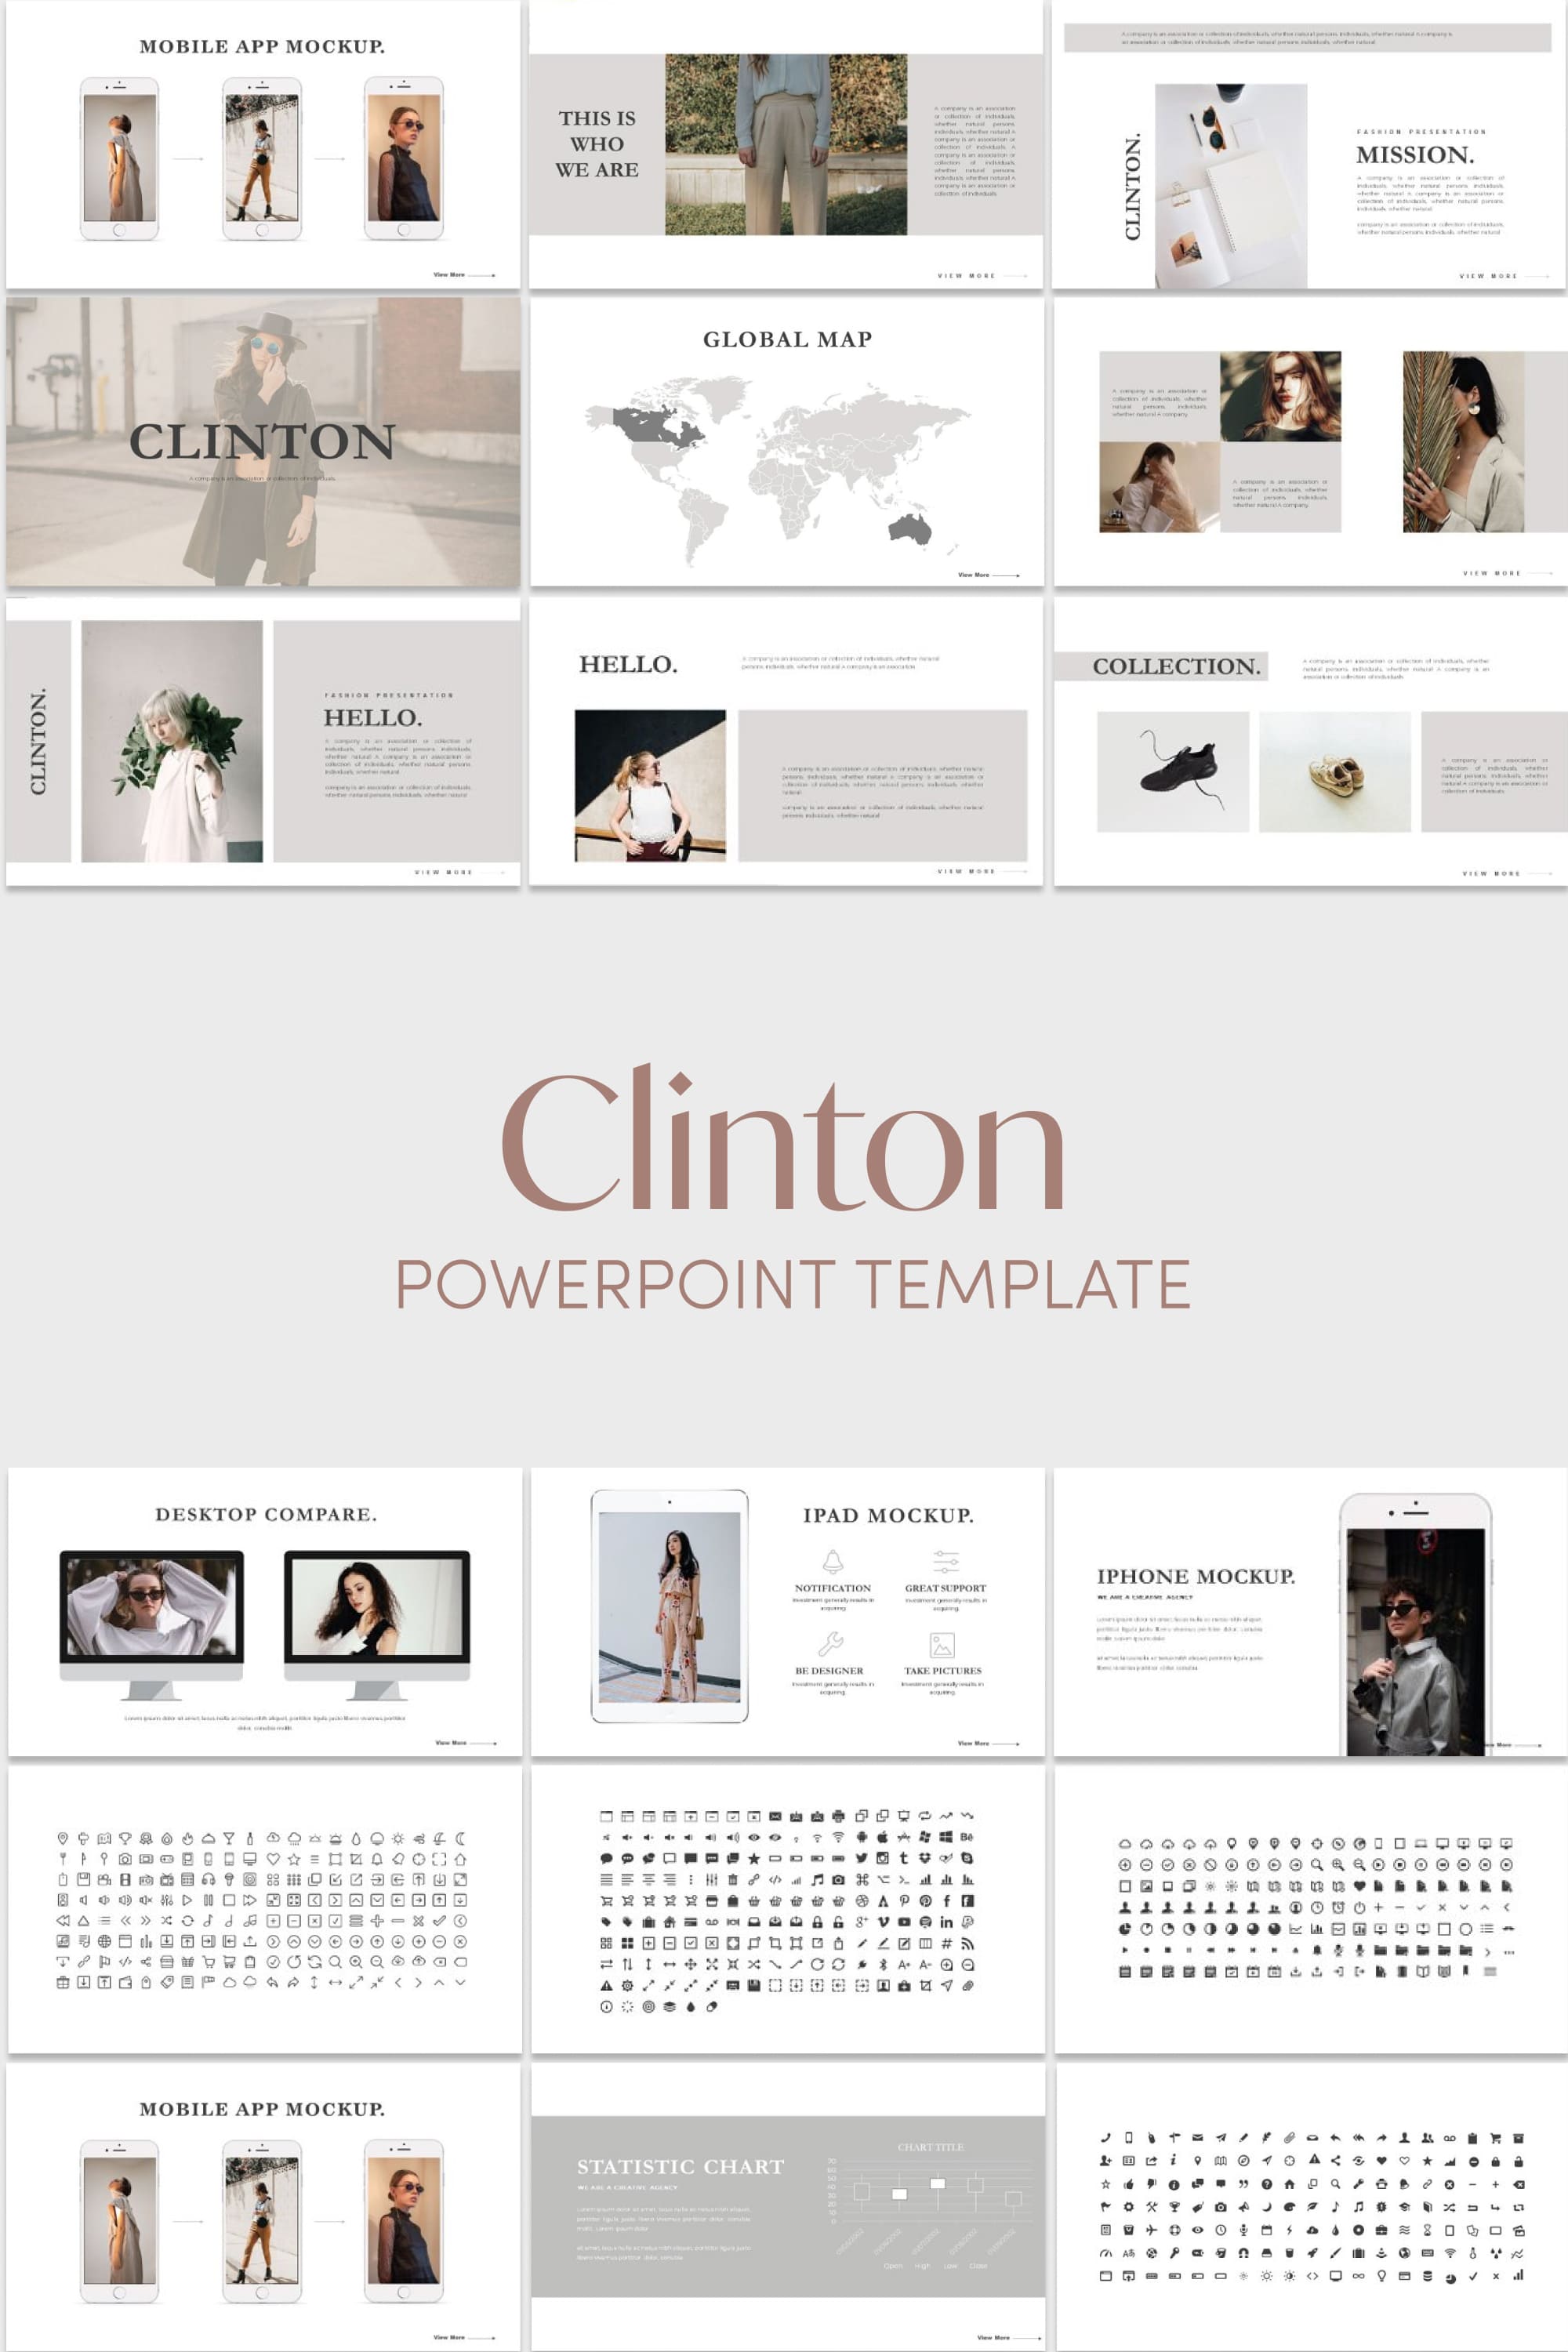 Clinton powerpoint template - pinterest image preview.